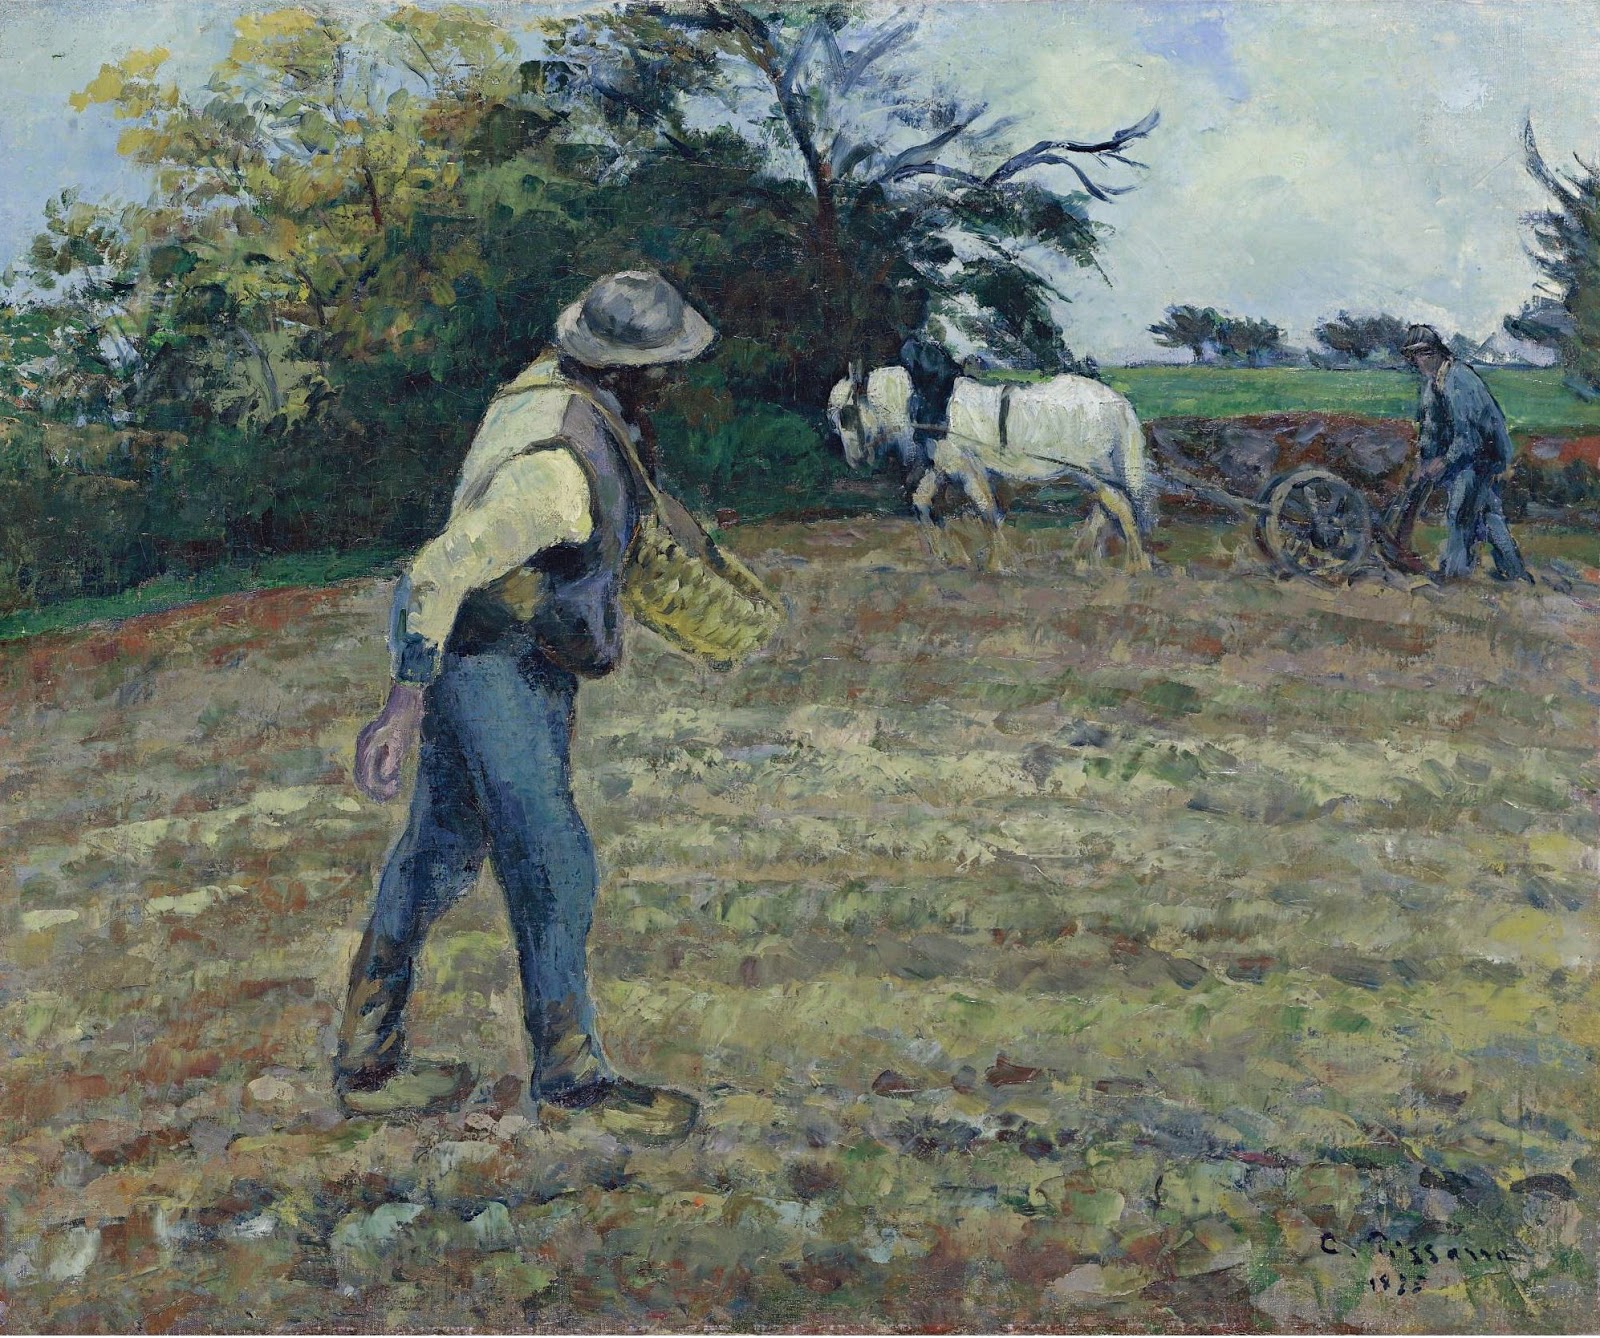 Camille+Pissarro-1830-1903 (436).jpg